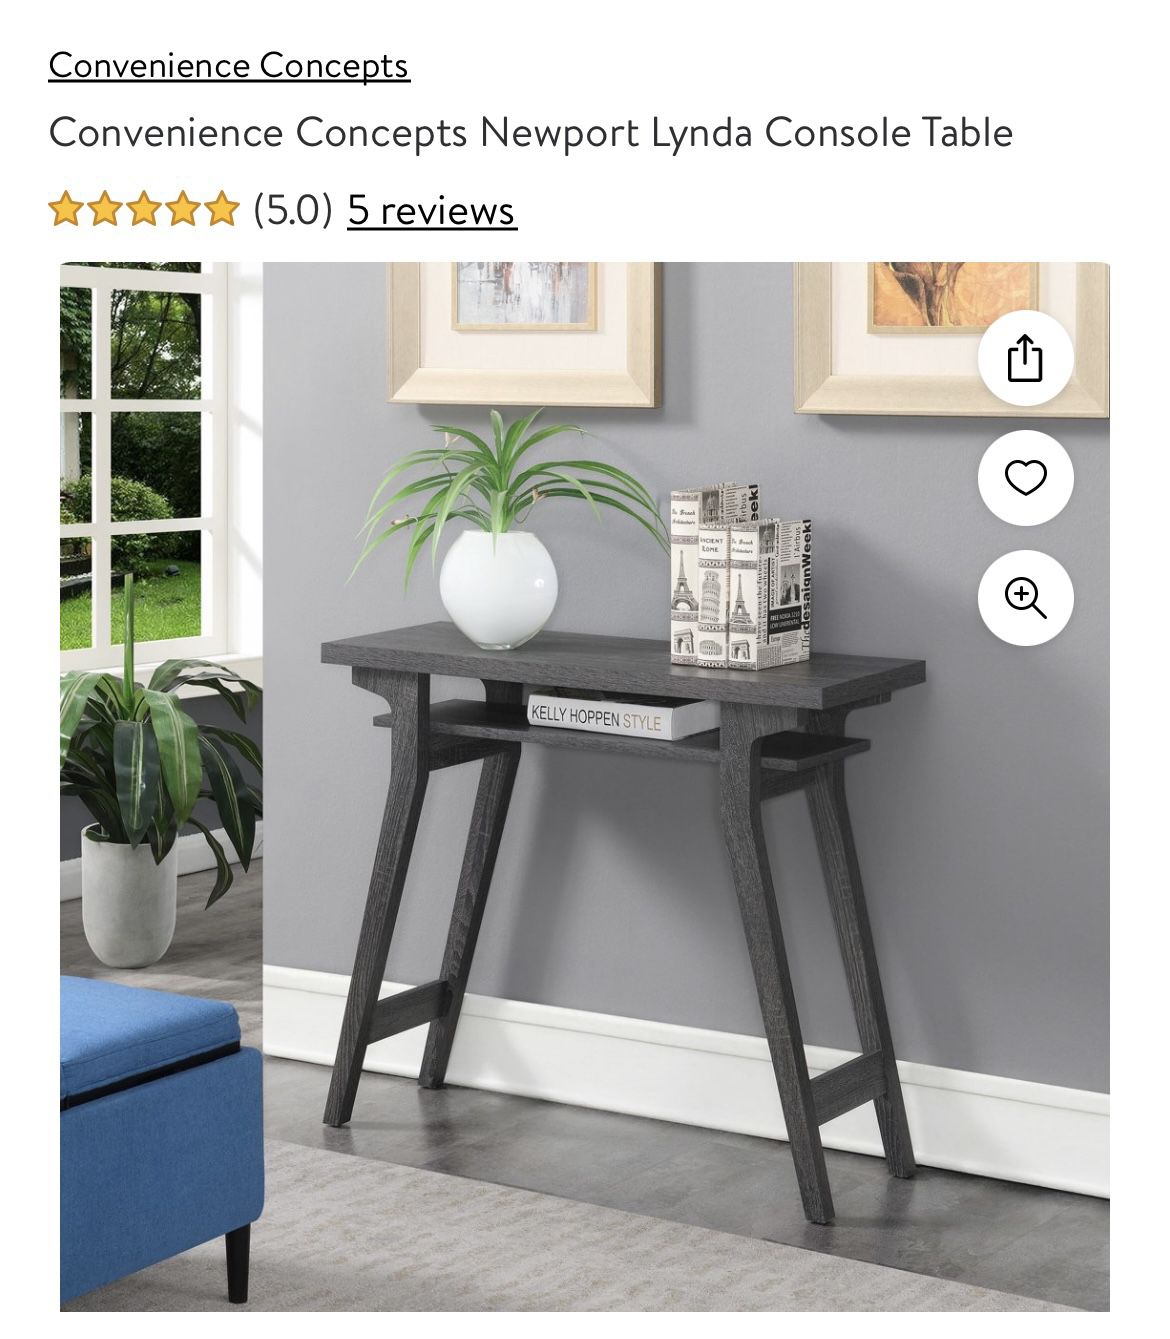 Convenience Concepts Newport Lynda Console Table